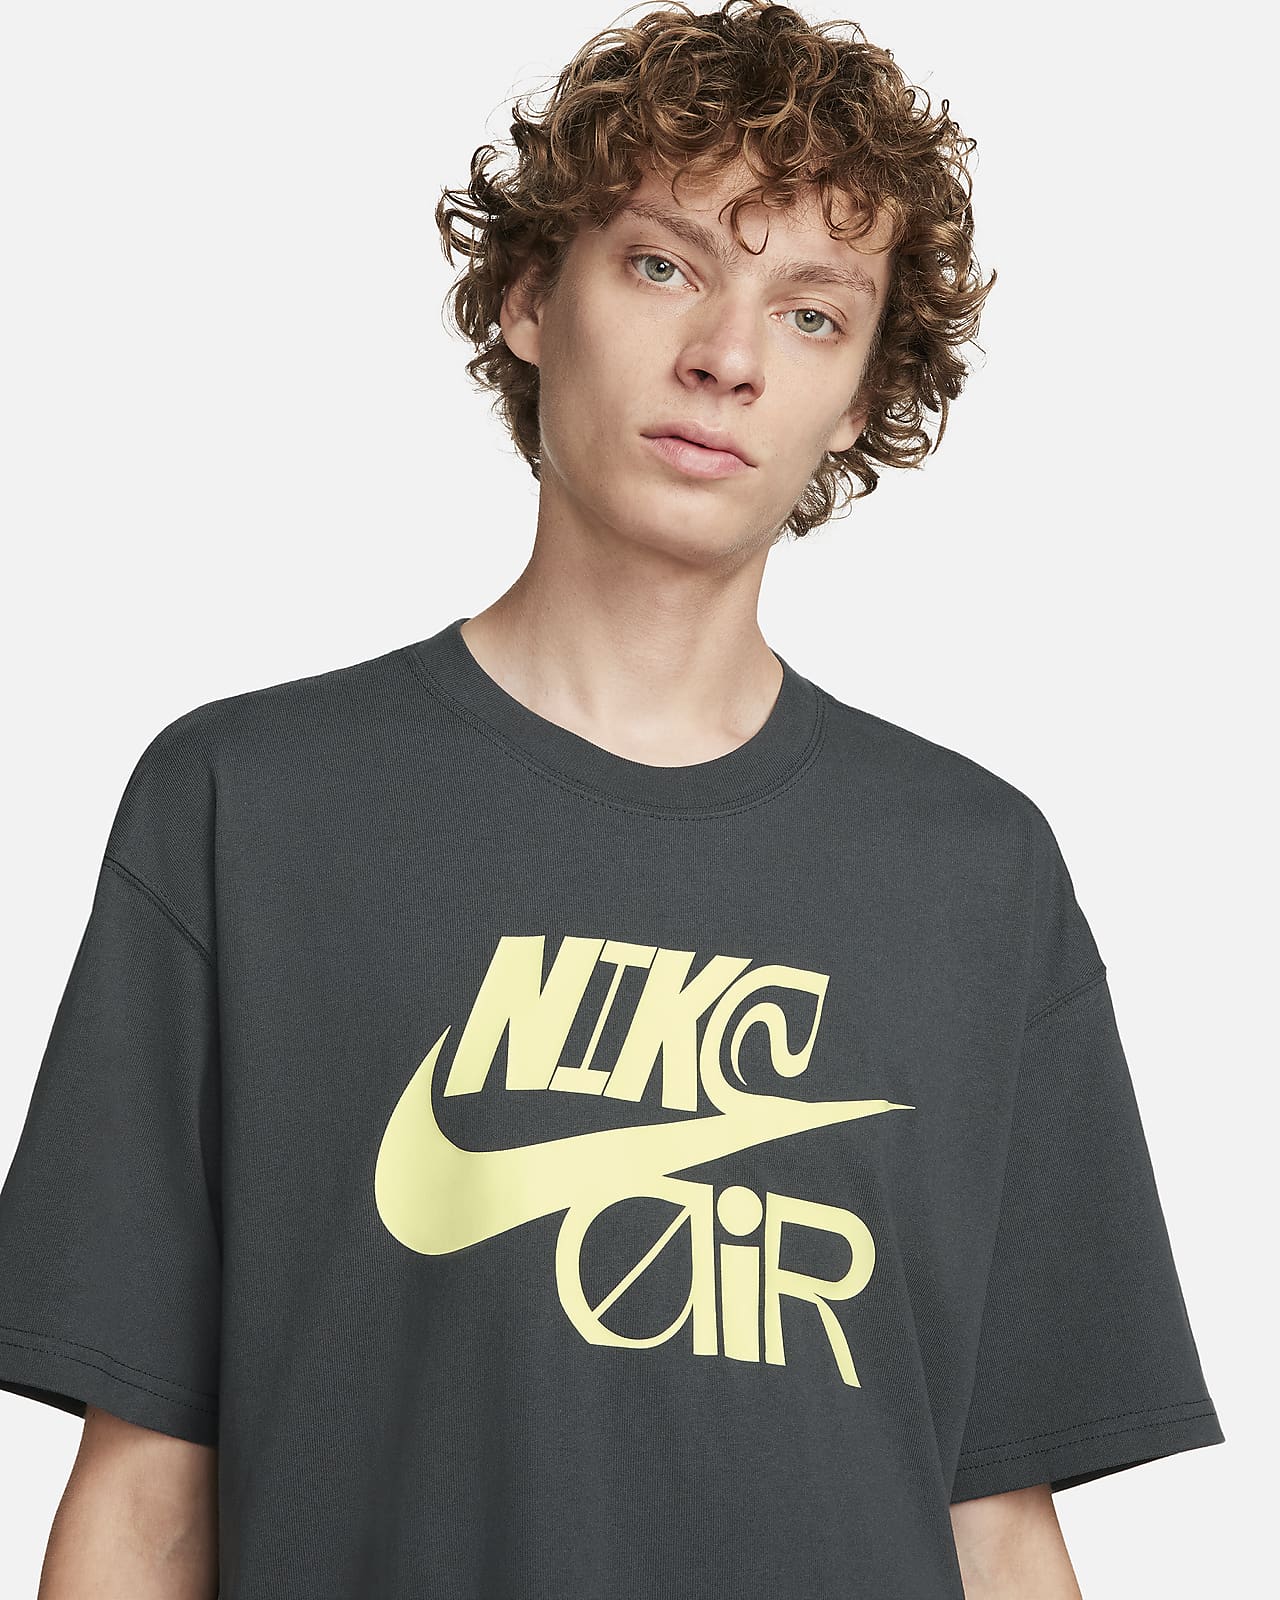 Men's Nike Sportswear Tuned Air Graphic Long-Sleeve T-Shirt